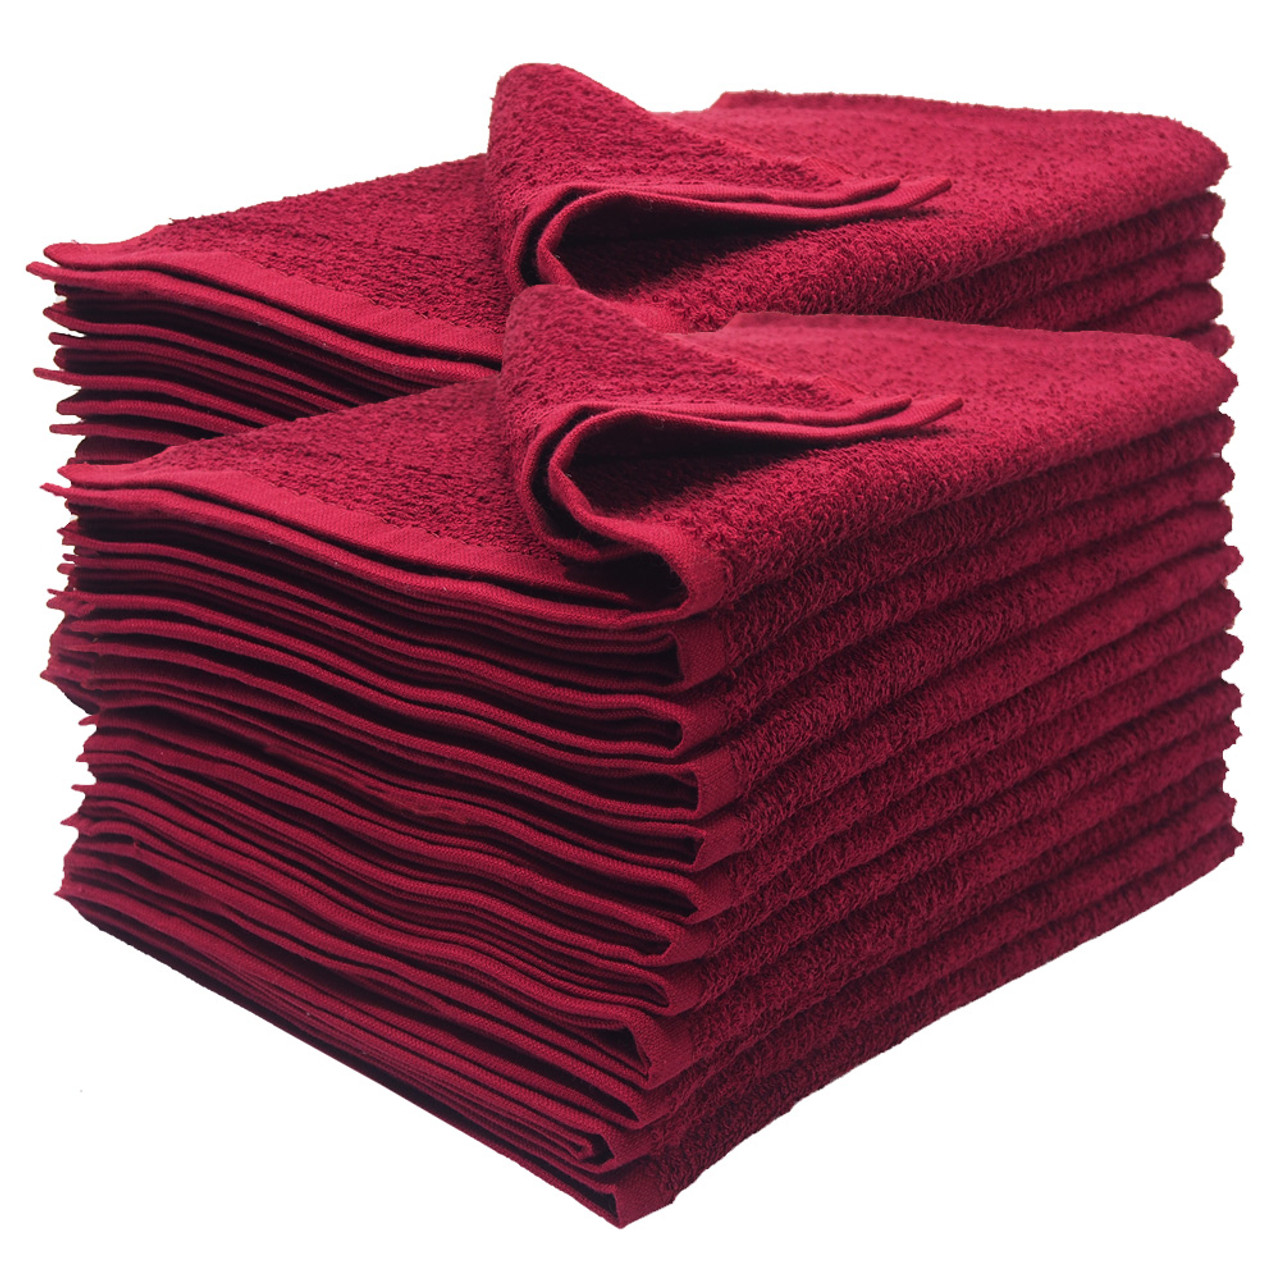 BleachBuster JR'S - The Bleach Proof Towel